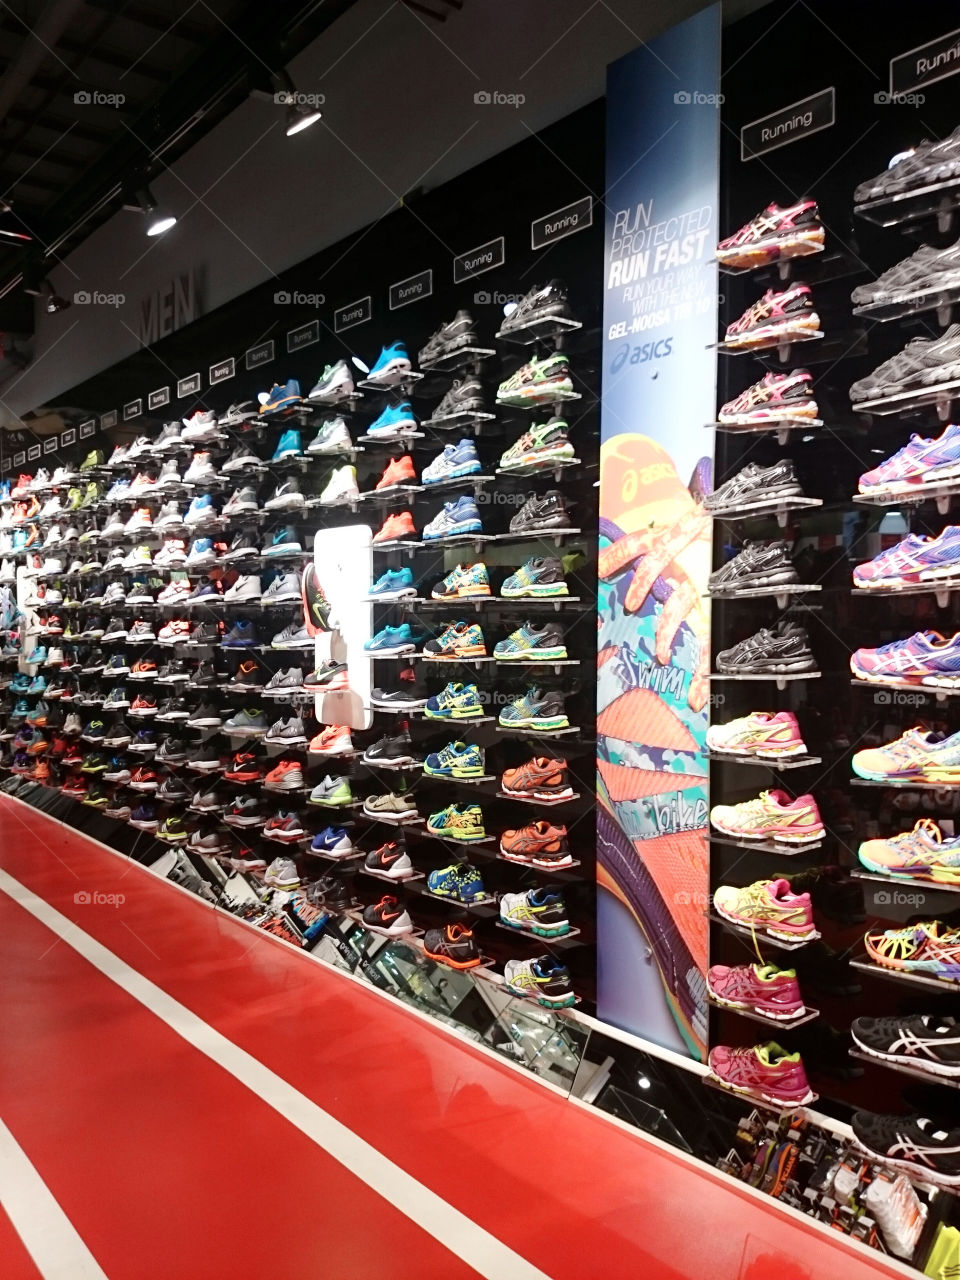 Go sport shoes, Grand Mall Oman